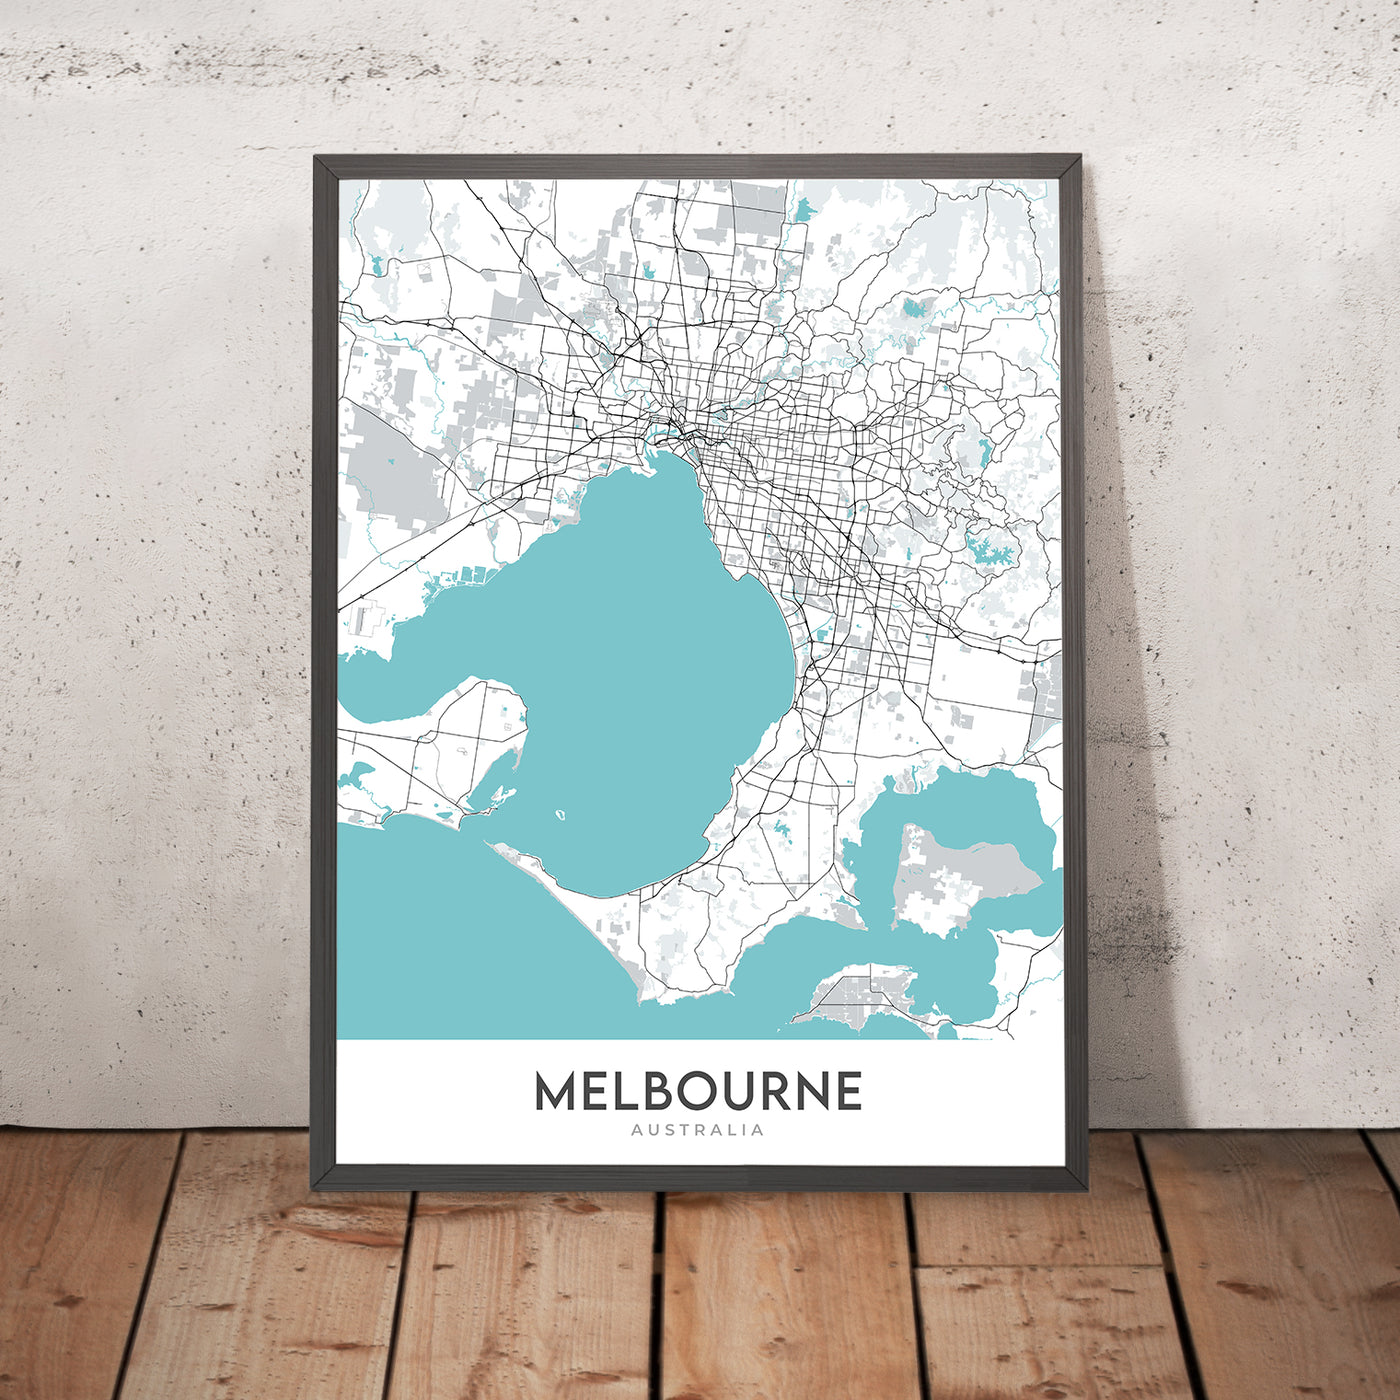 Modern City Map of Melbourne, Australia: MCG, NGV, Queen Victoria Market, South Melbourne Market, Prahran Market